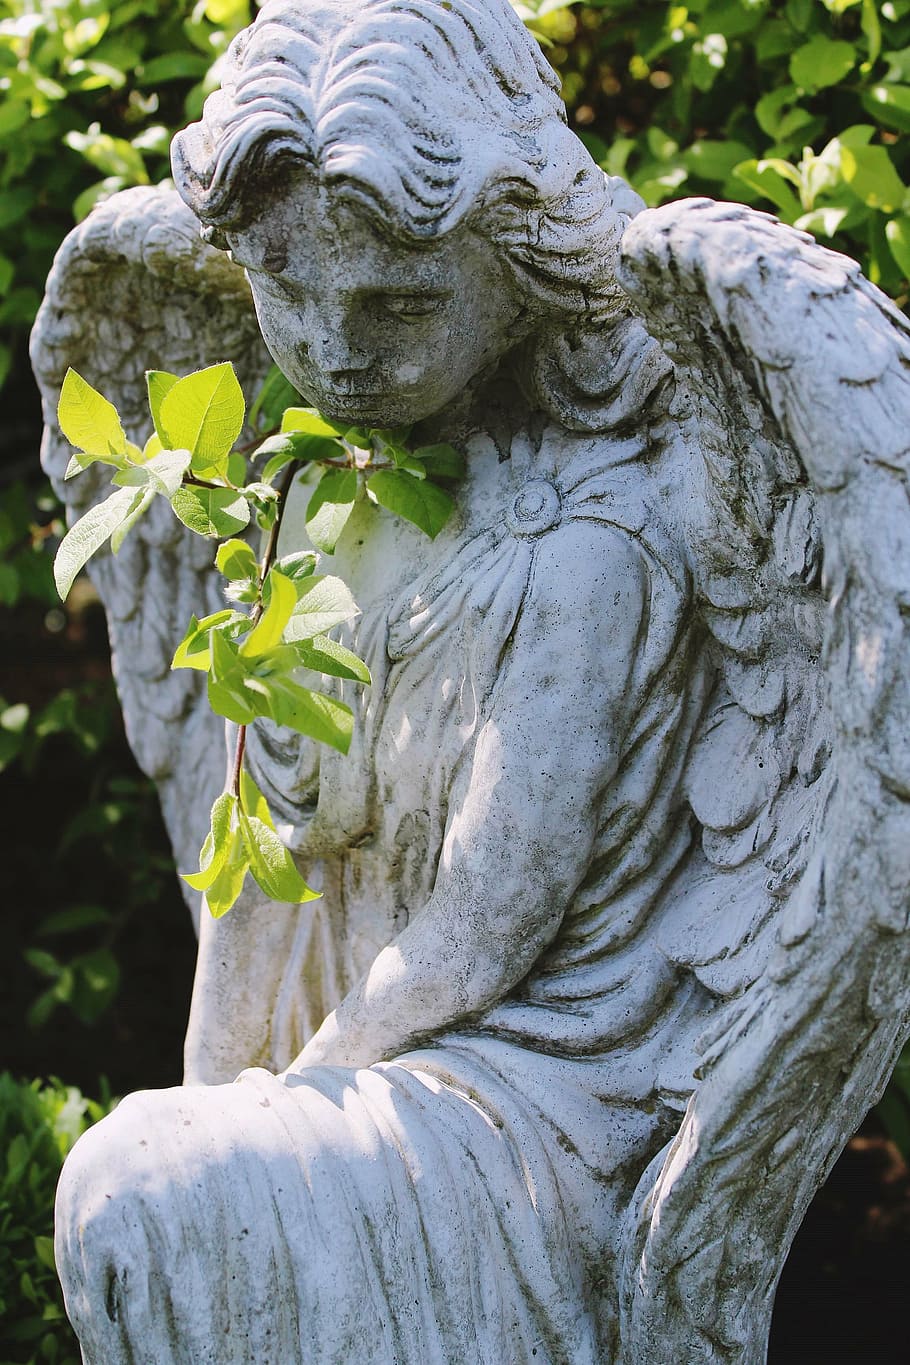 cherub statuette near green leaf plant at daytime, angel, nature